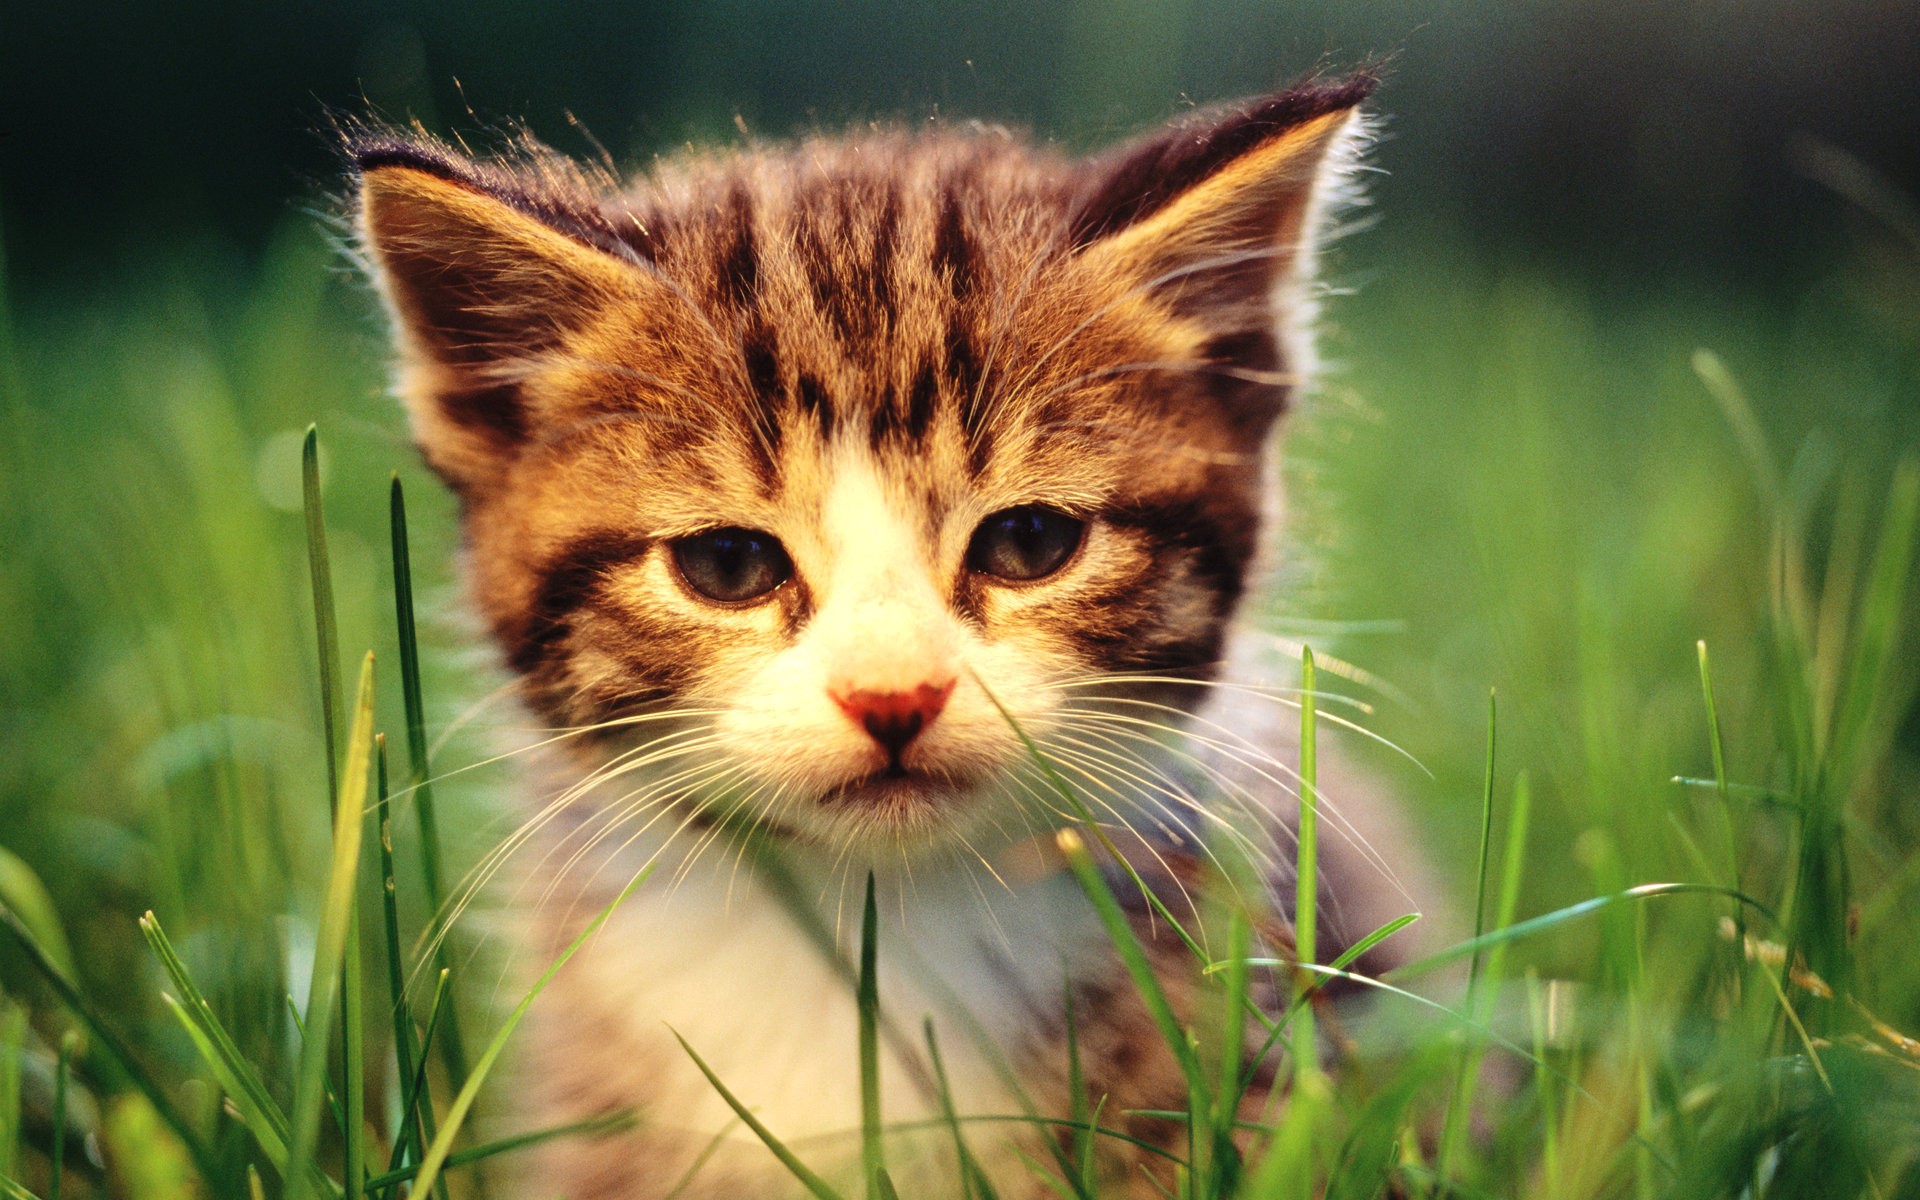 cats, animals, grass, kittens, baby animals - desktop wallpaper